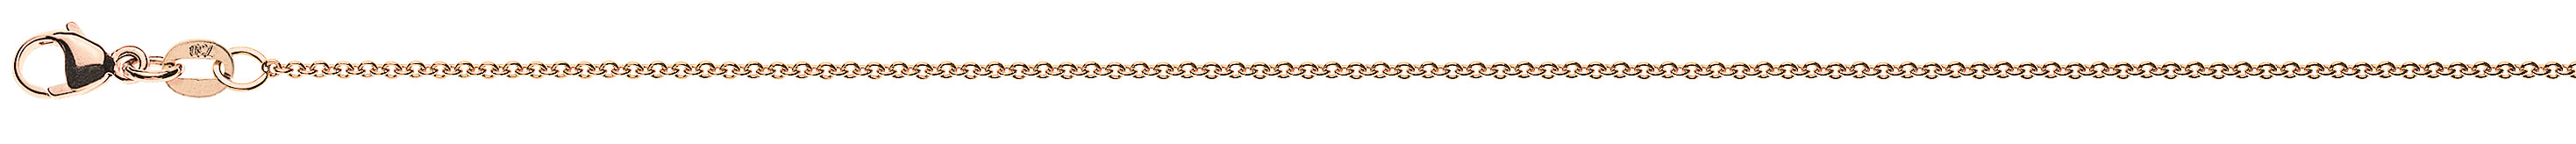 AURONOS Prestige Necklace Rose Gold 18K Round Anchor 38cm 1.3mm